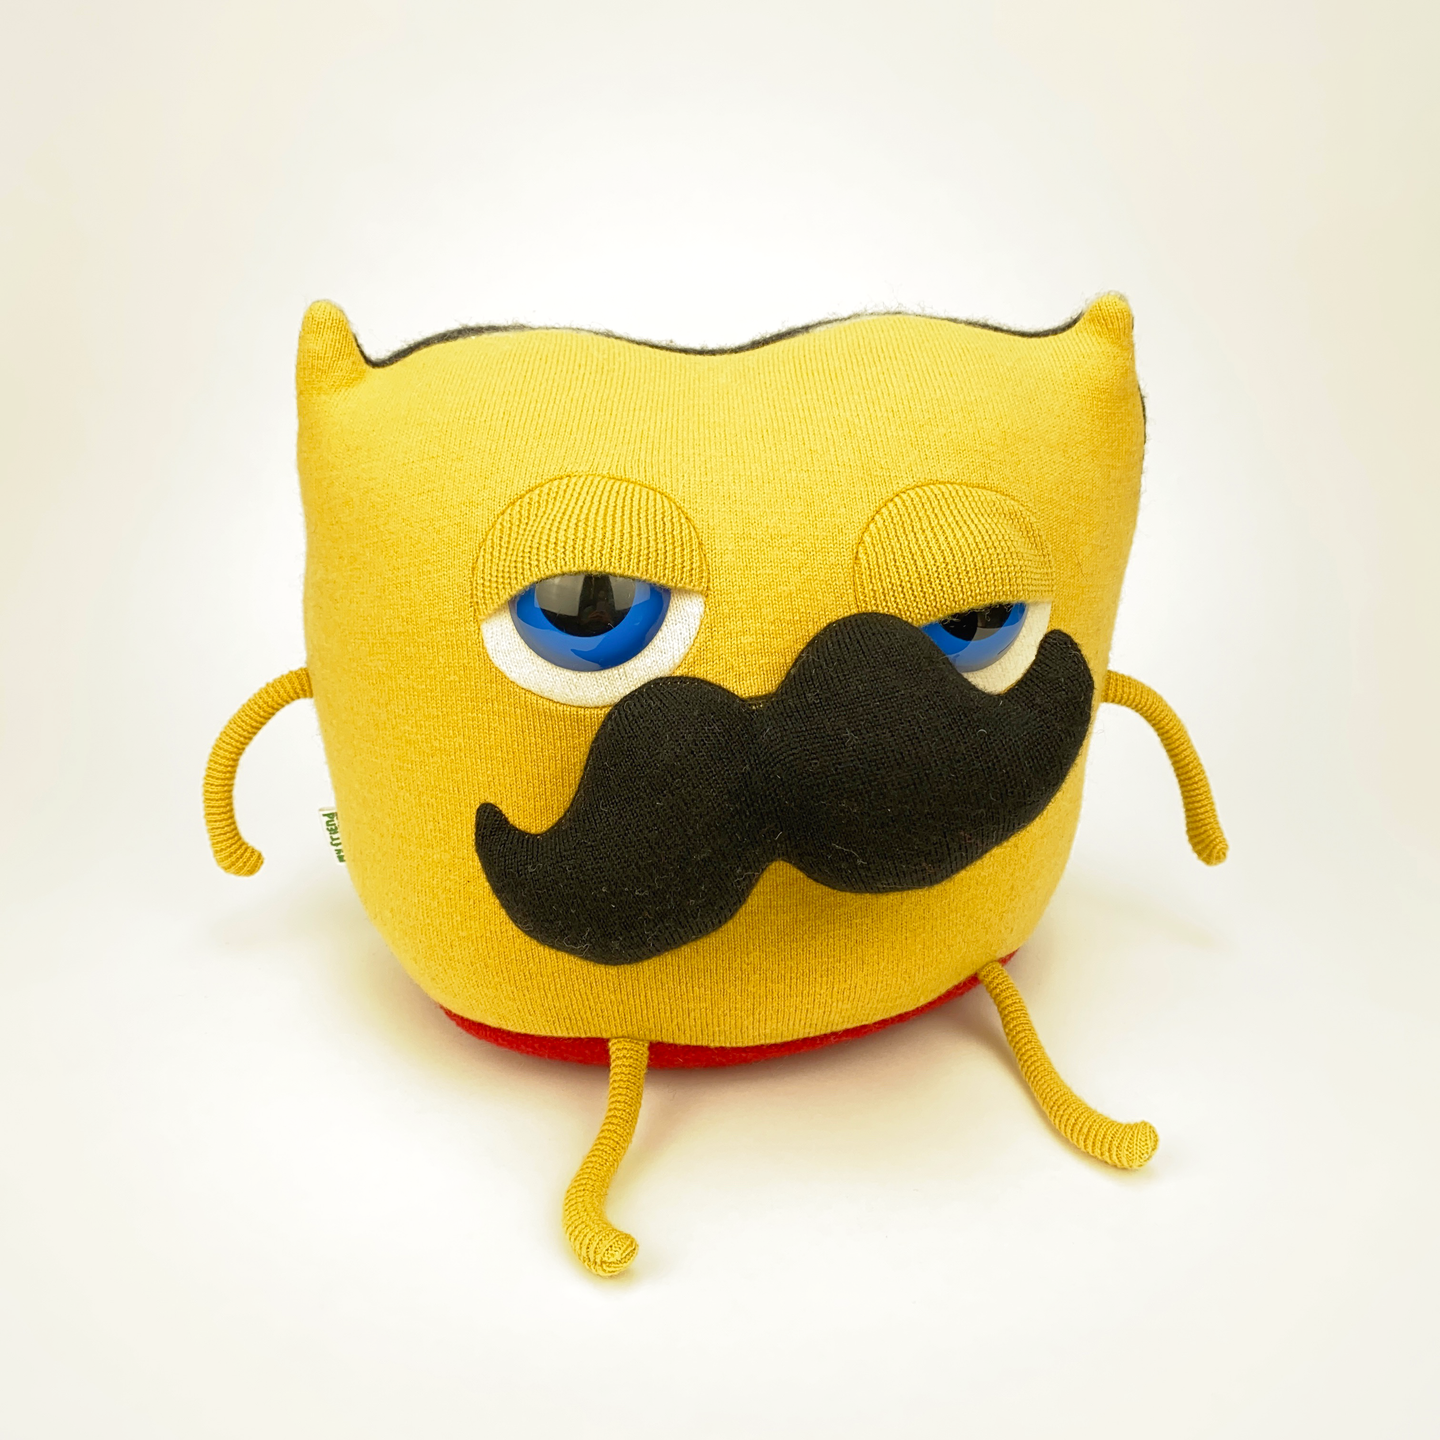 Sir Snuffles the yellow handmade stuffed moustache monster plush